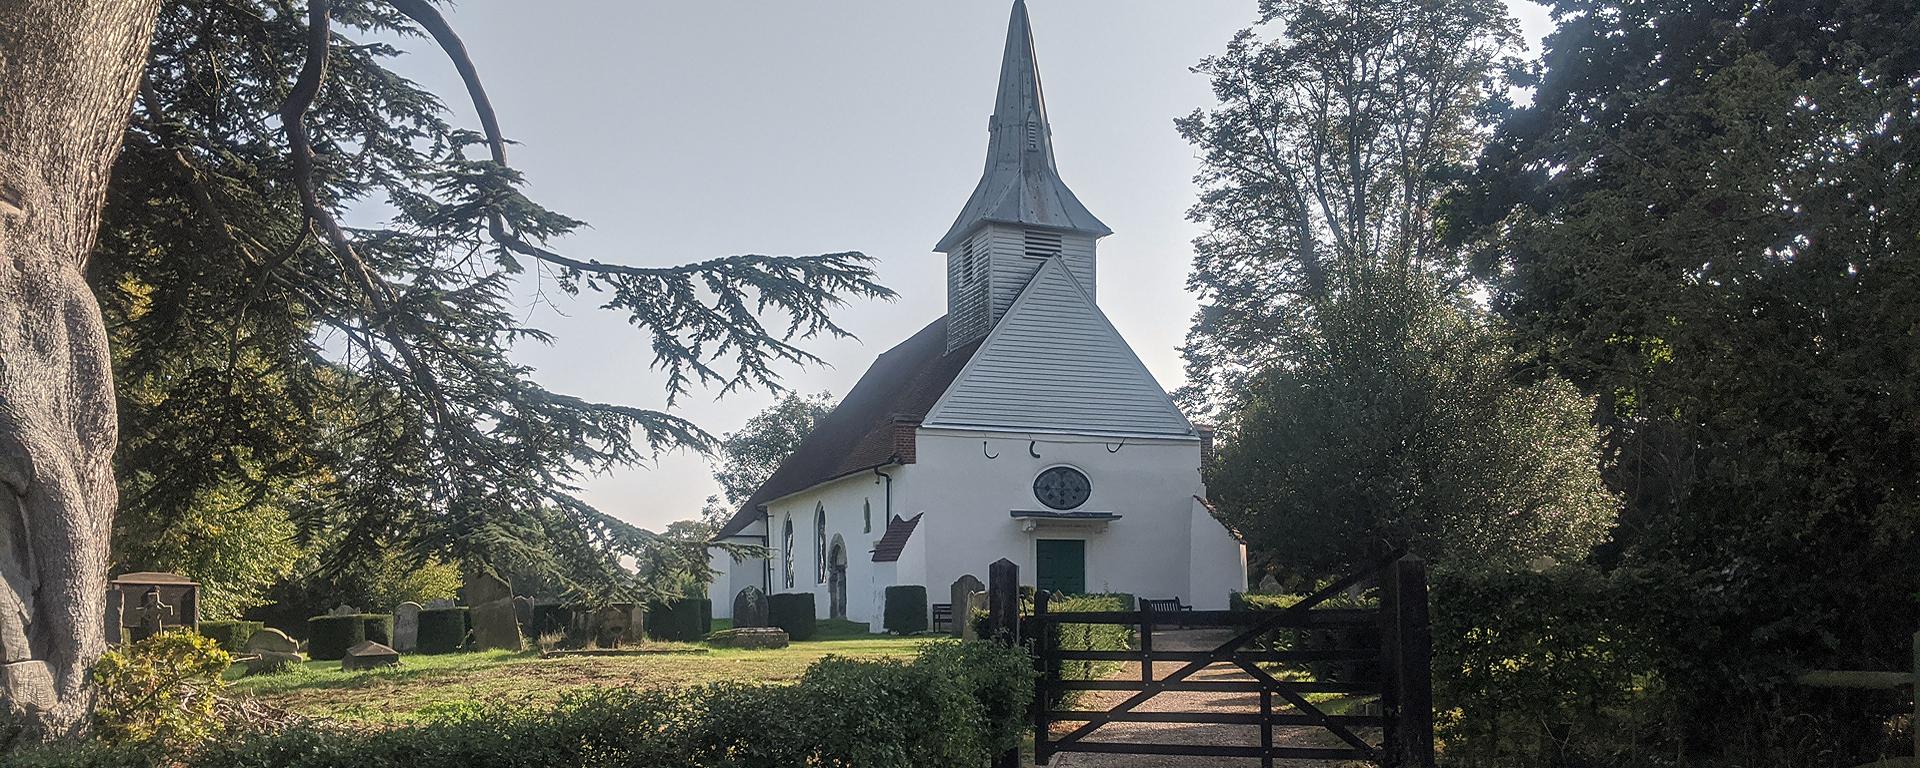 Lambourne Church in Lambourne Parish